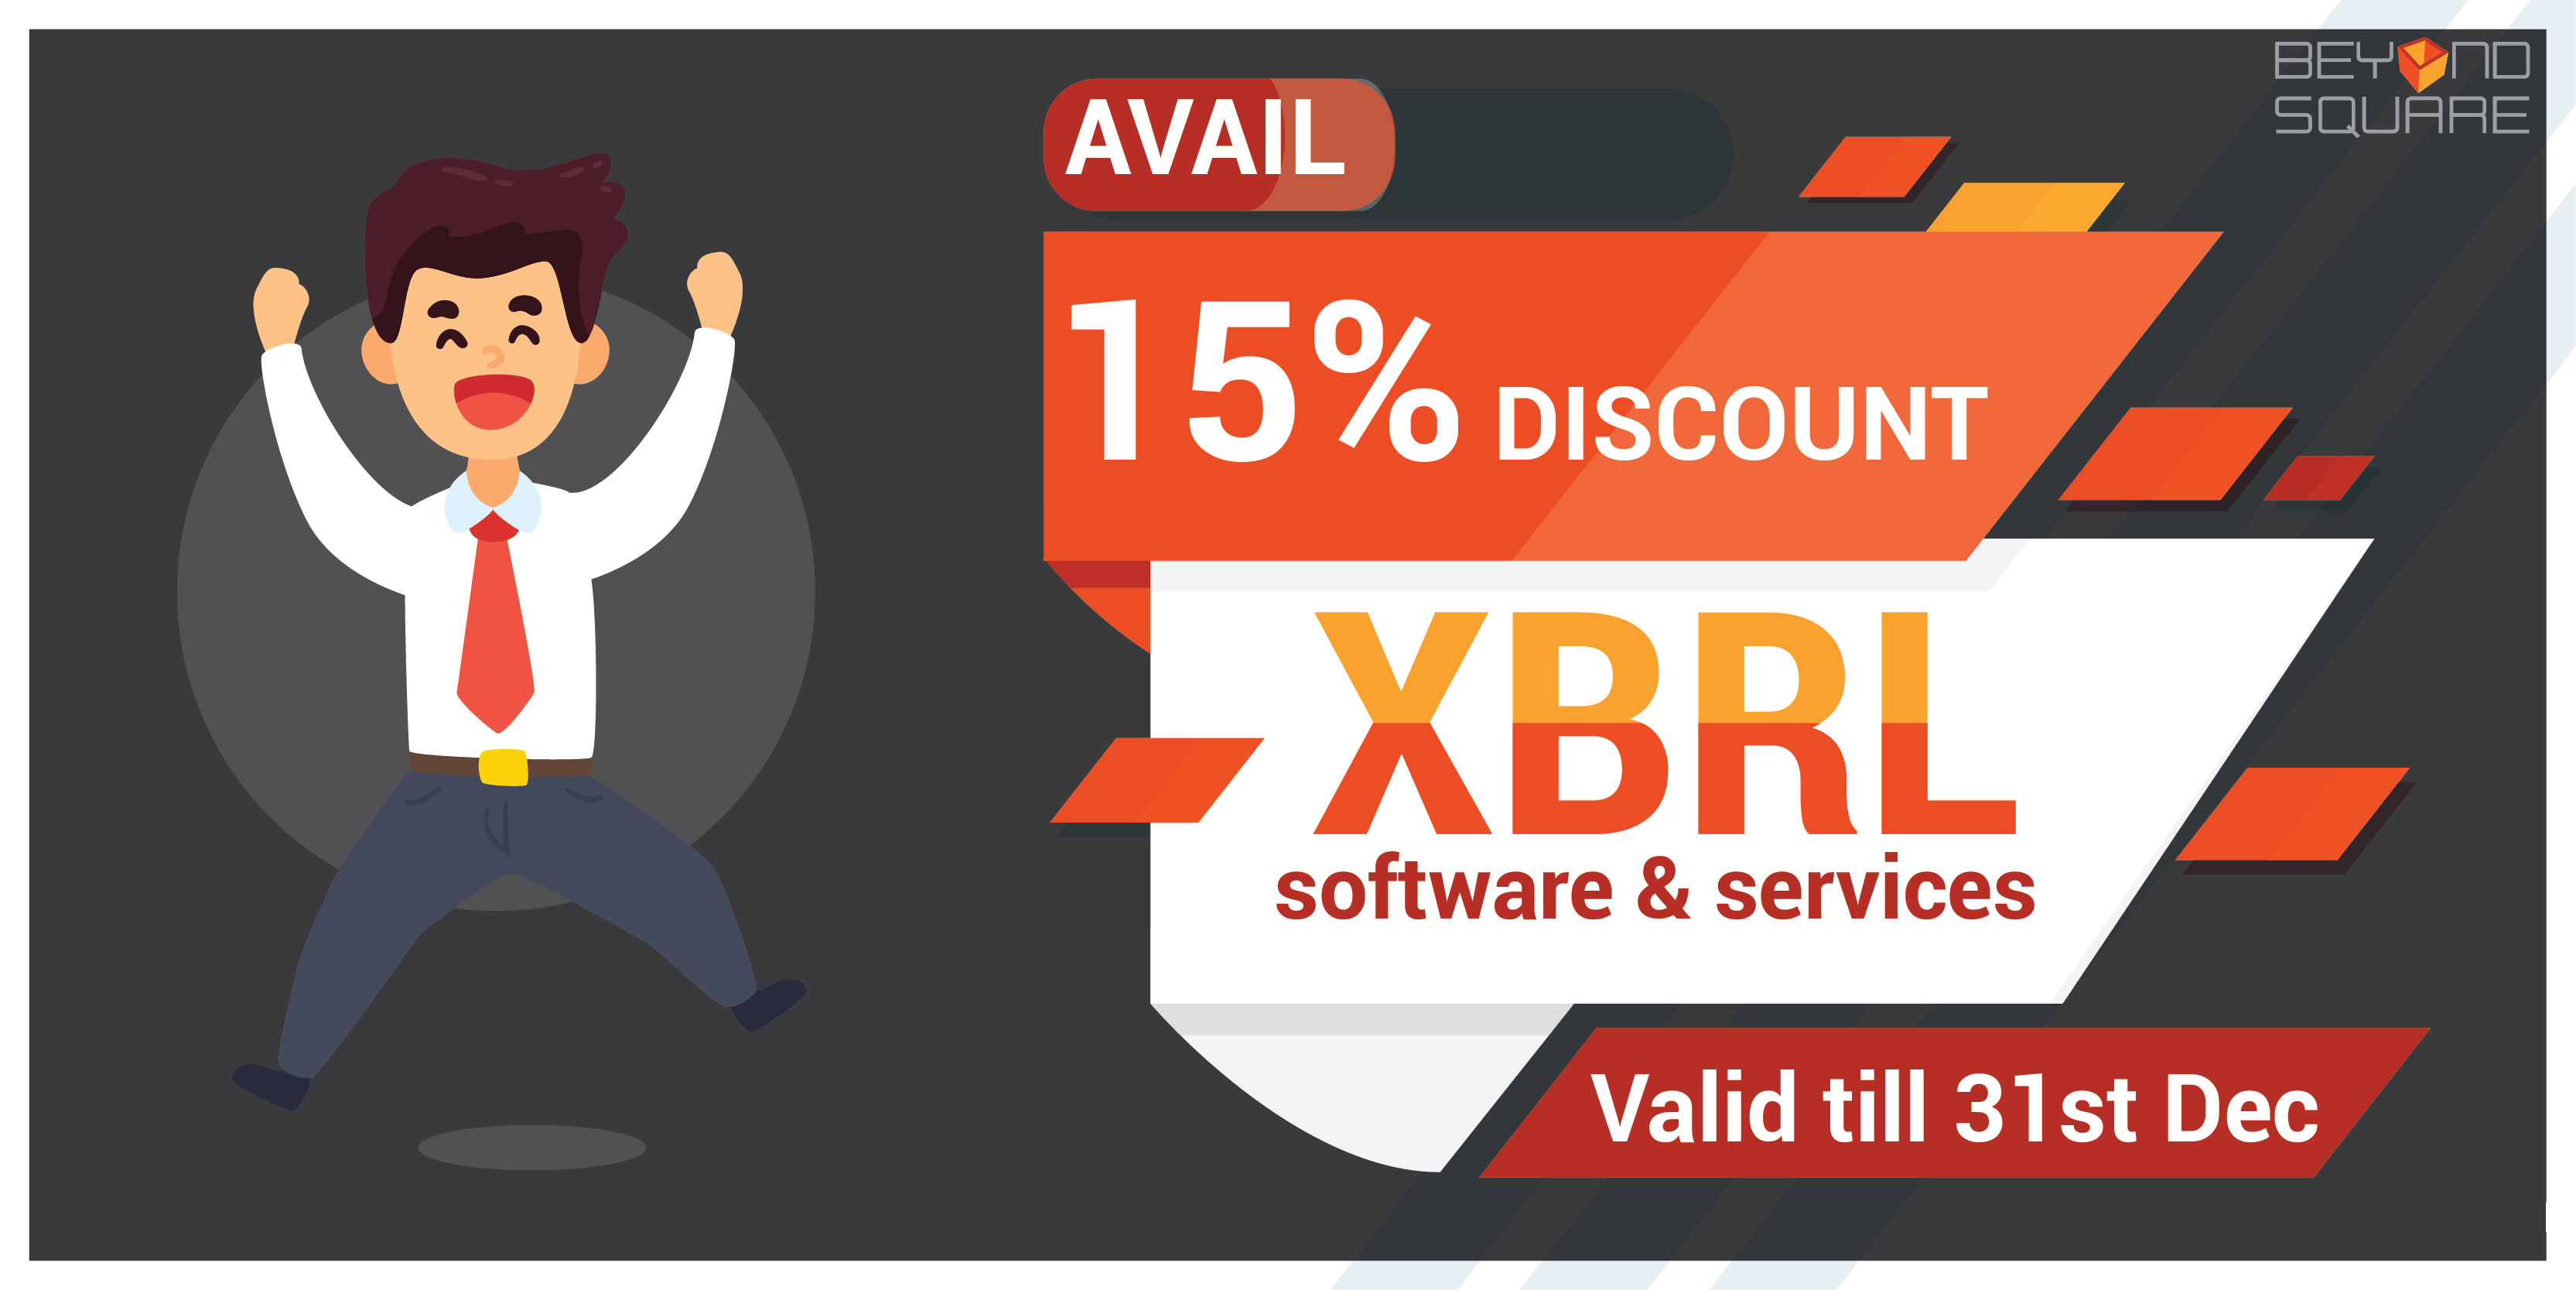 Avail offer on XBRL Software & Services â€“ till 31st Dec